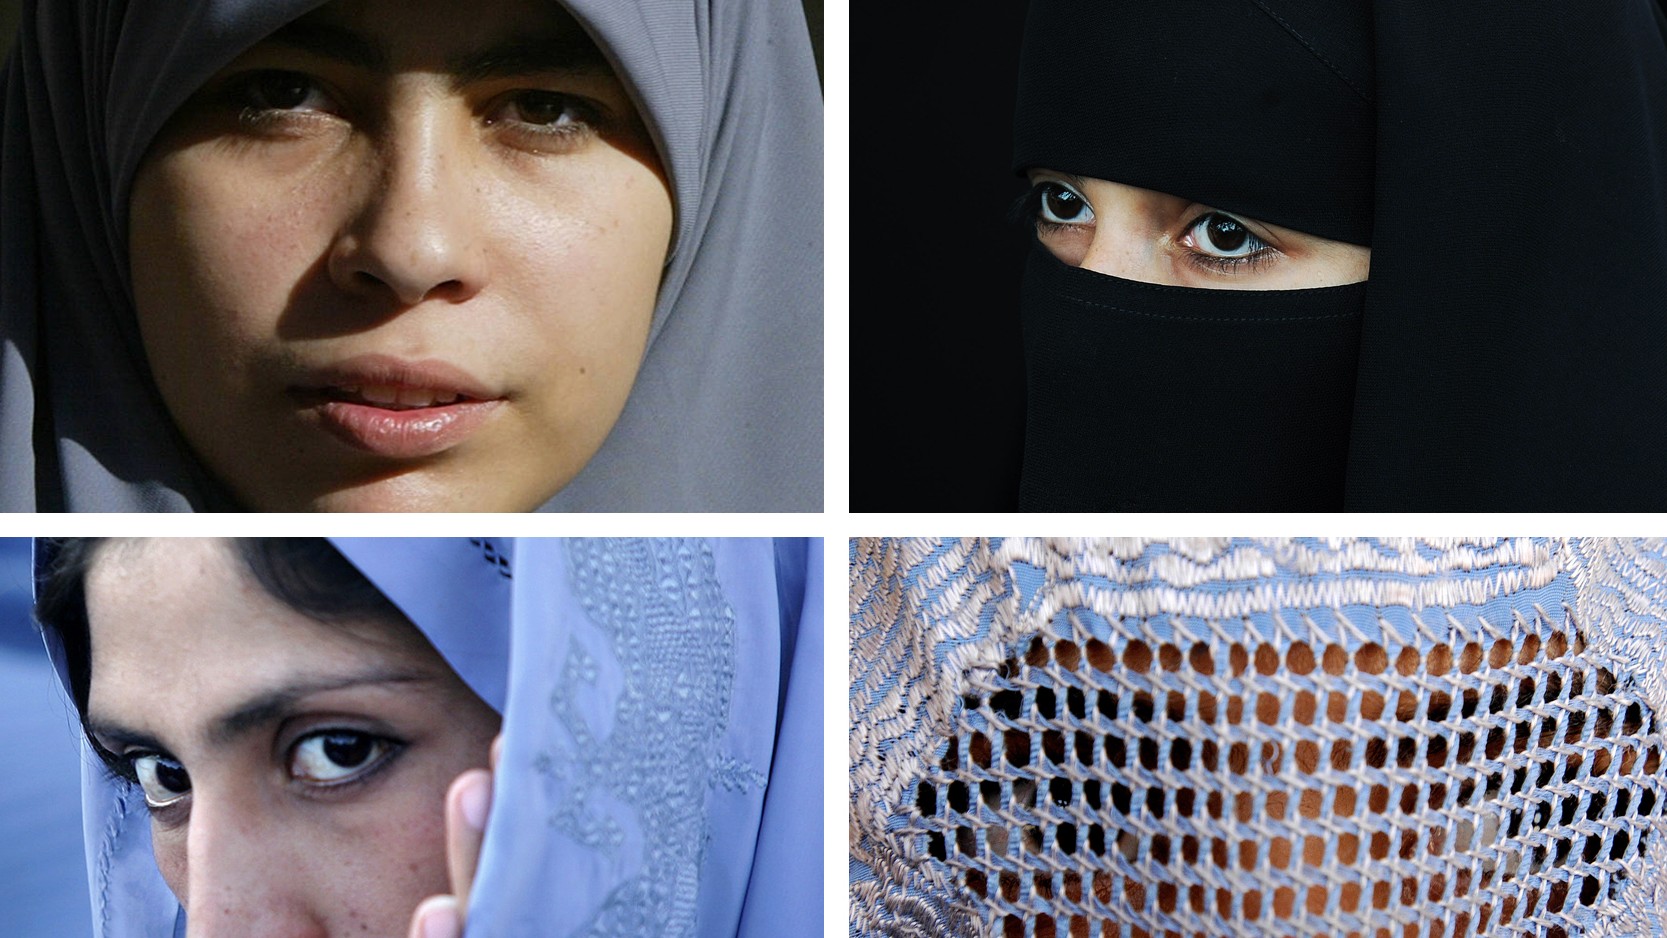 Kopfbedeckungen männer islam